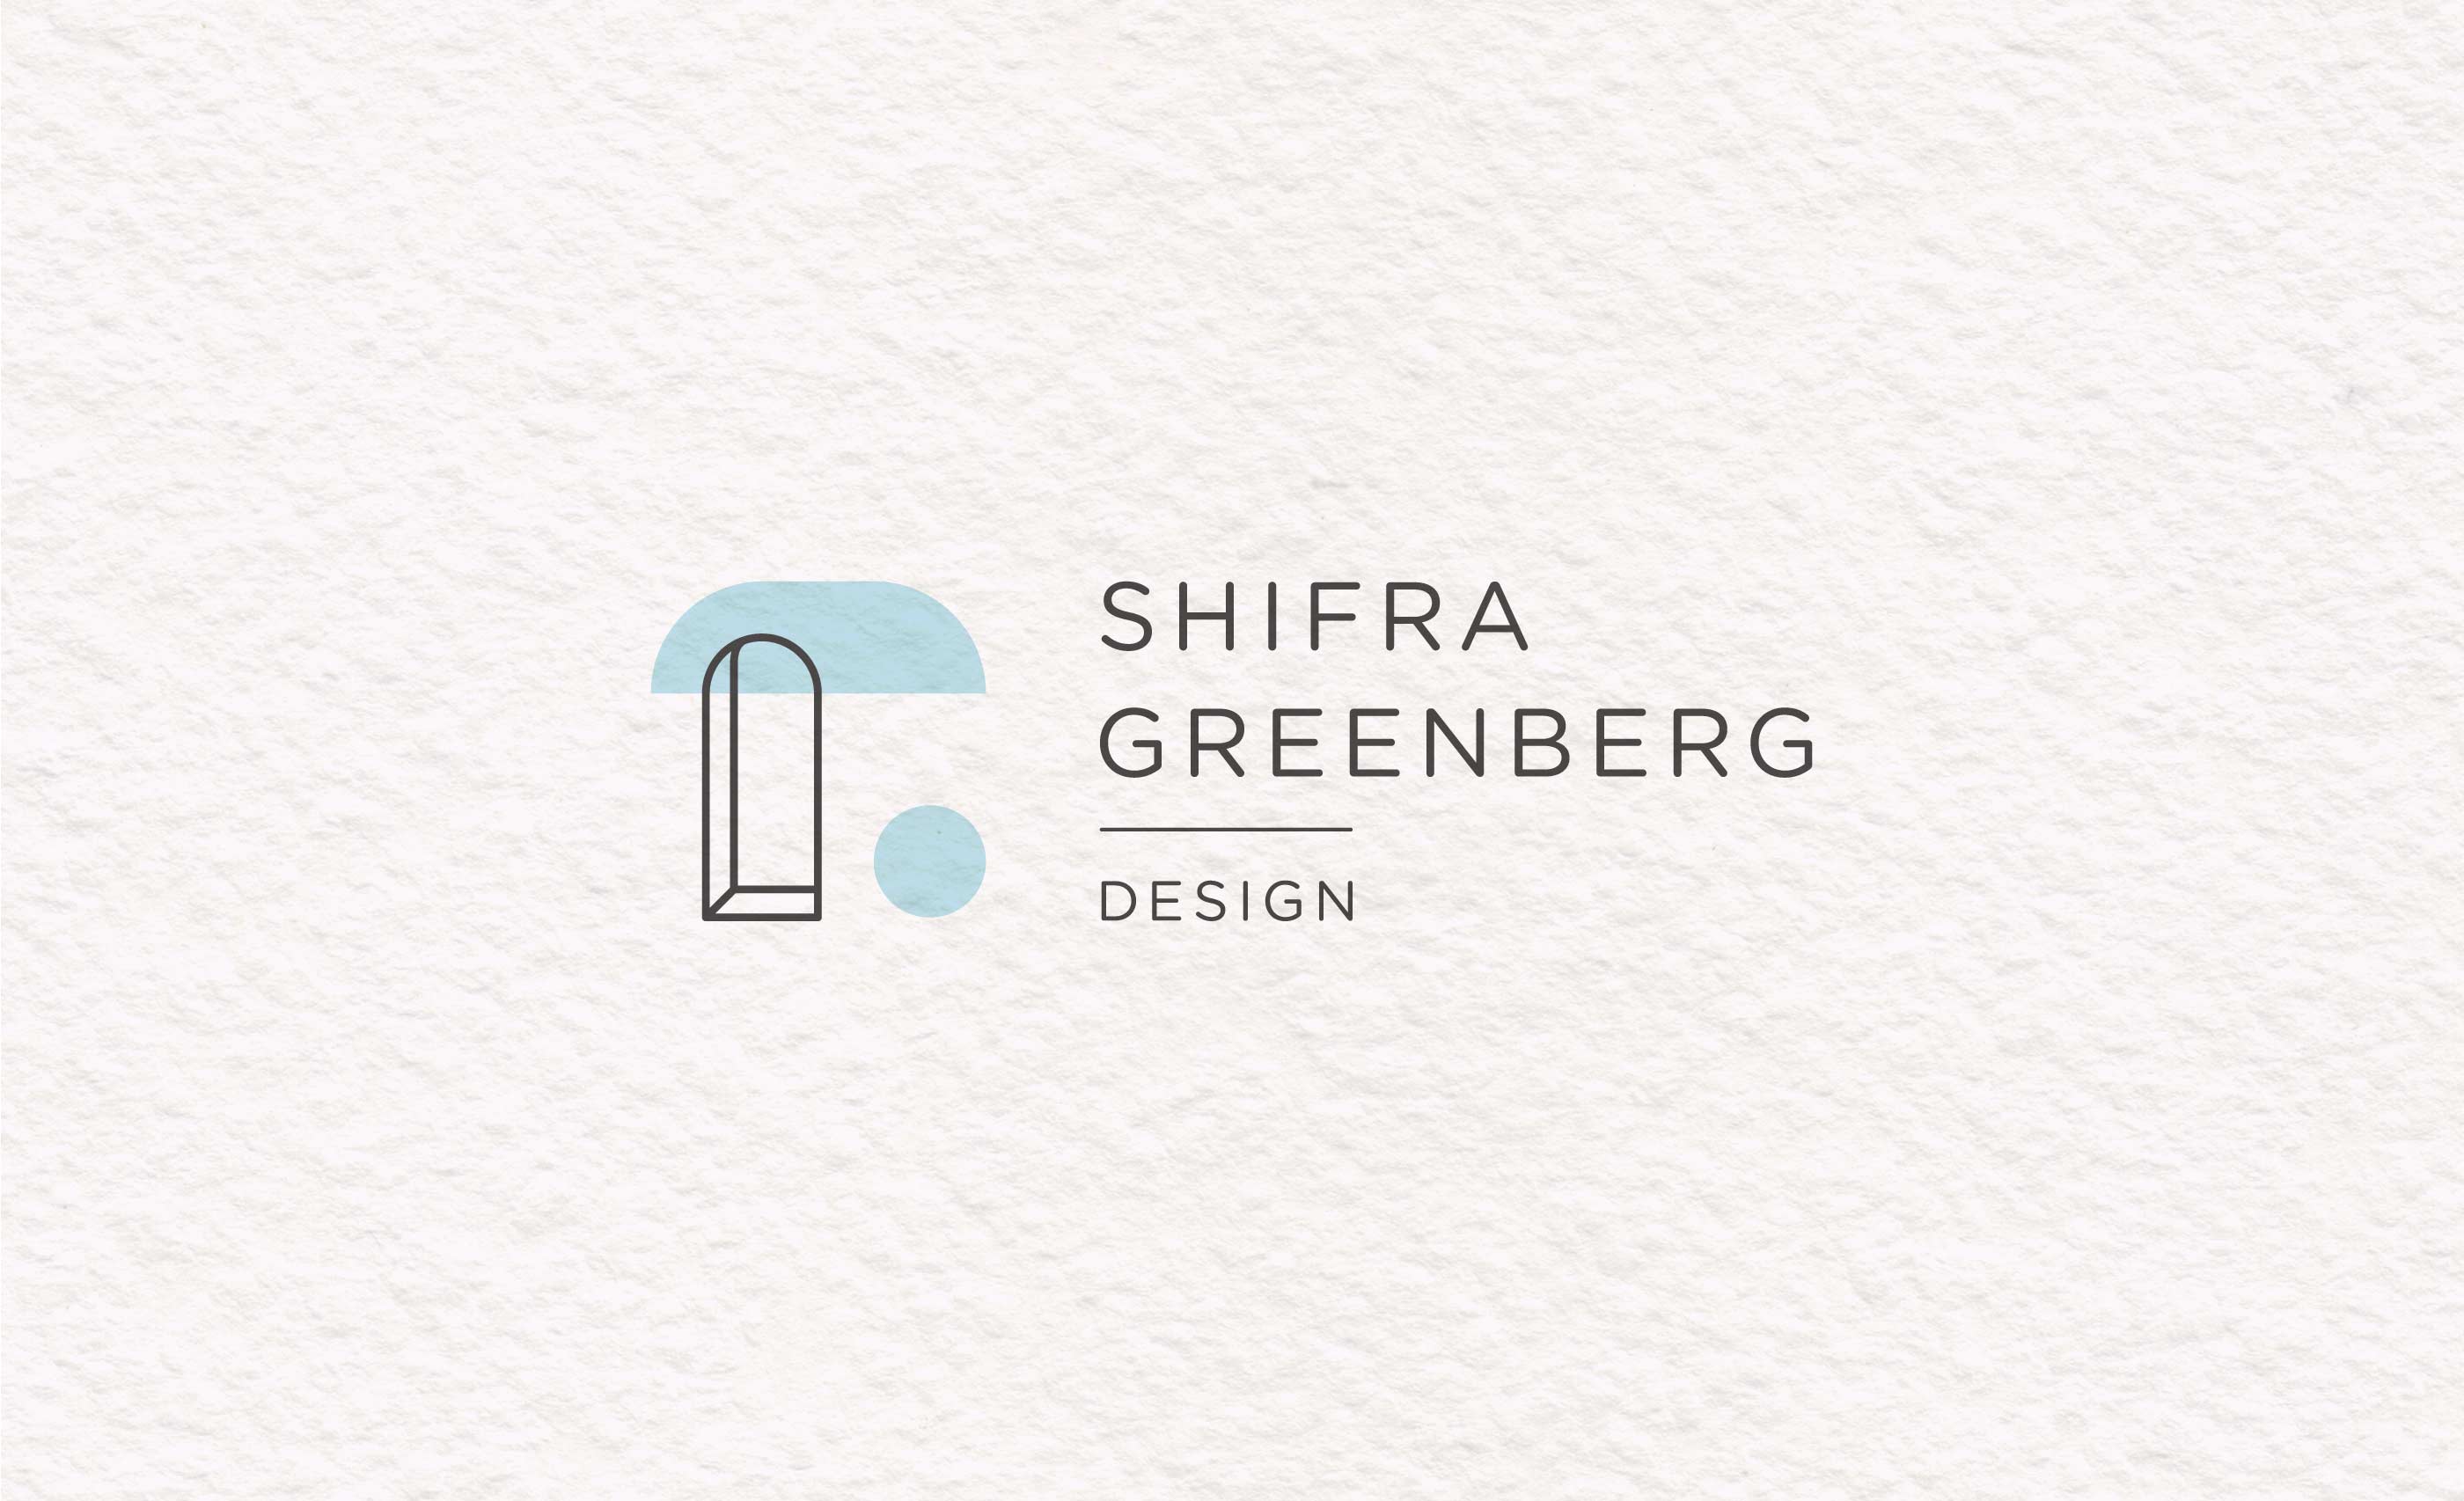 Interior designer logo on a white background.